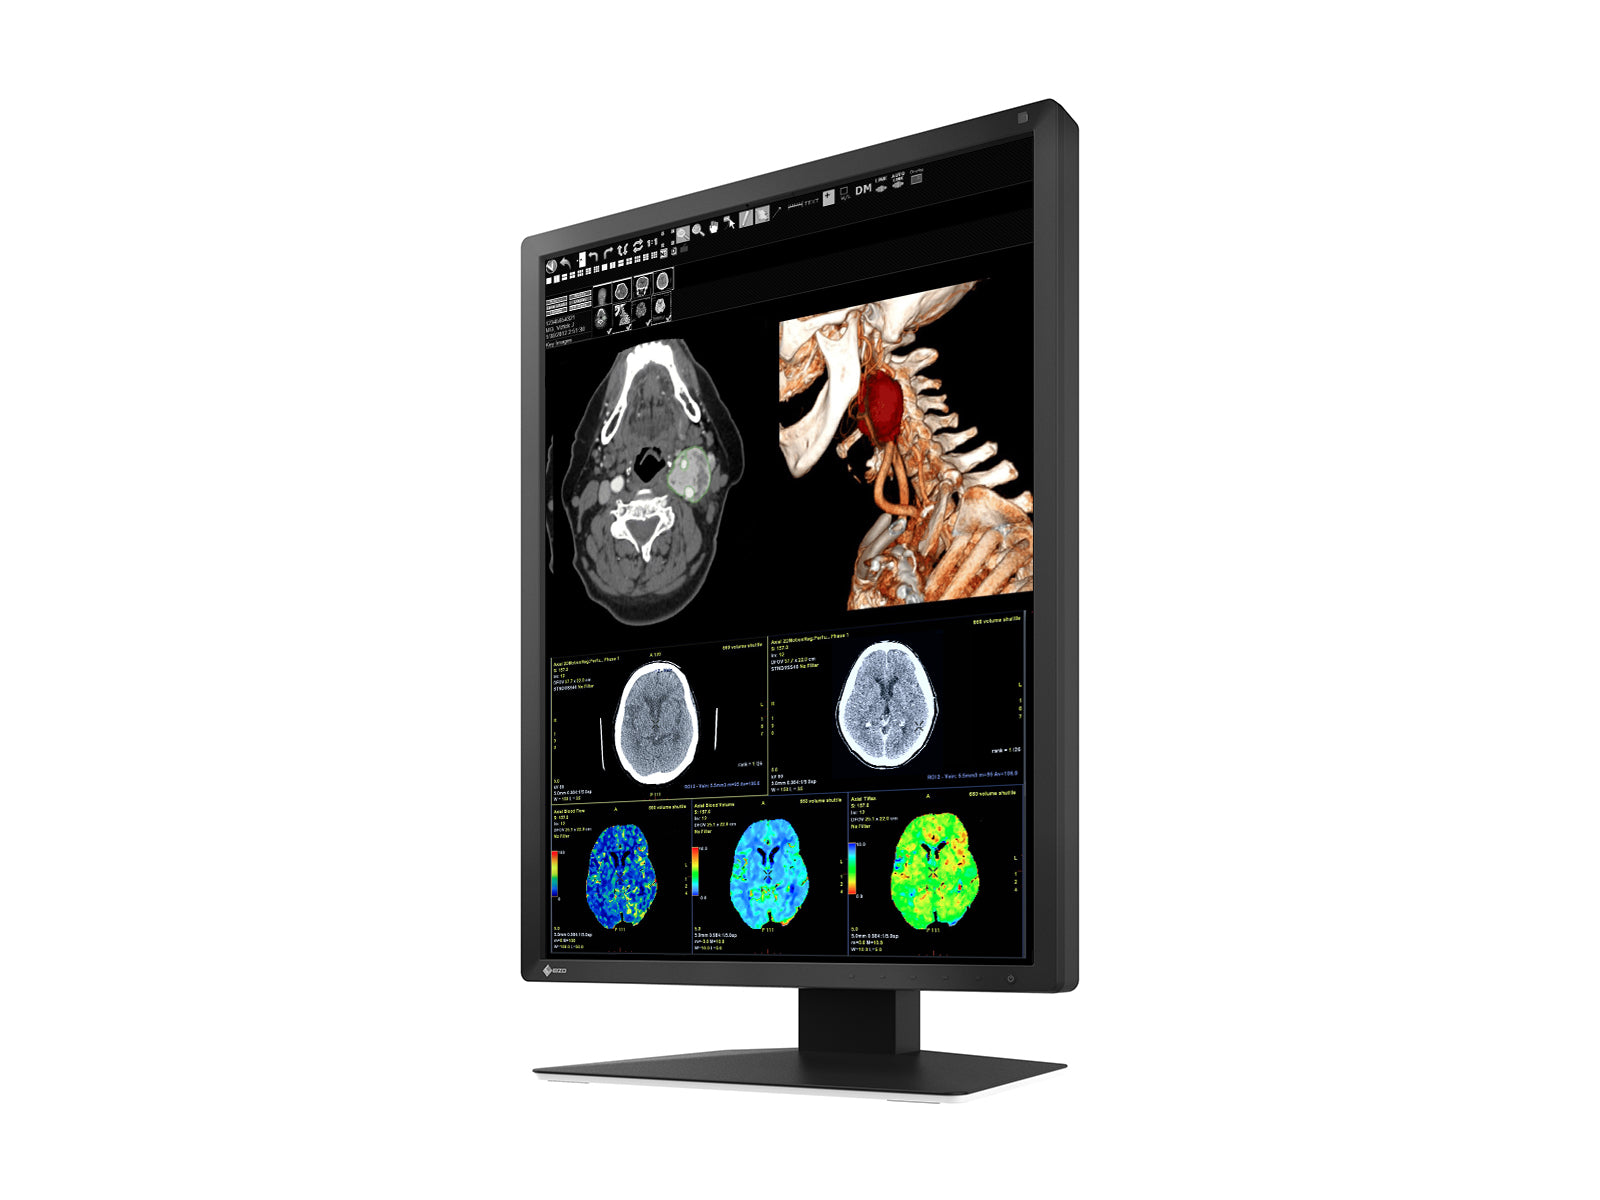 Eizo RadiForce MX217 2MP 21" Color LED Medical Display Monitor (MX217-BK)